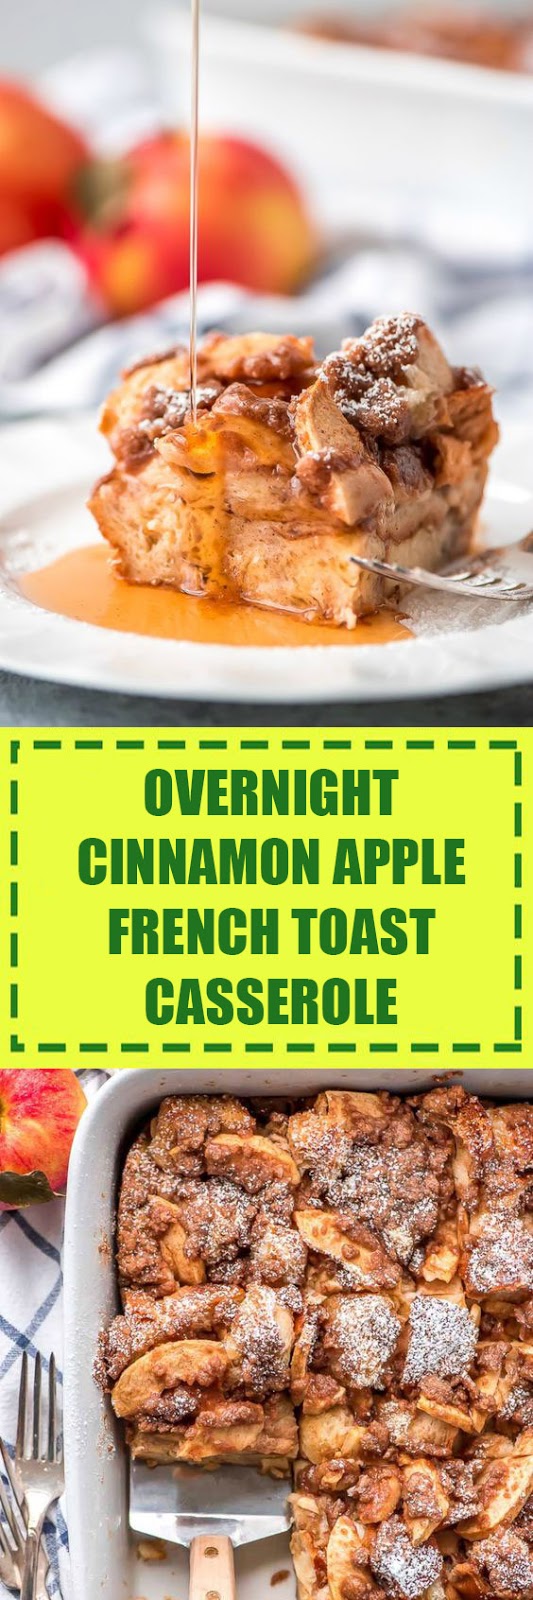 Overnight Cinnamon Apple French Toast Casserole